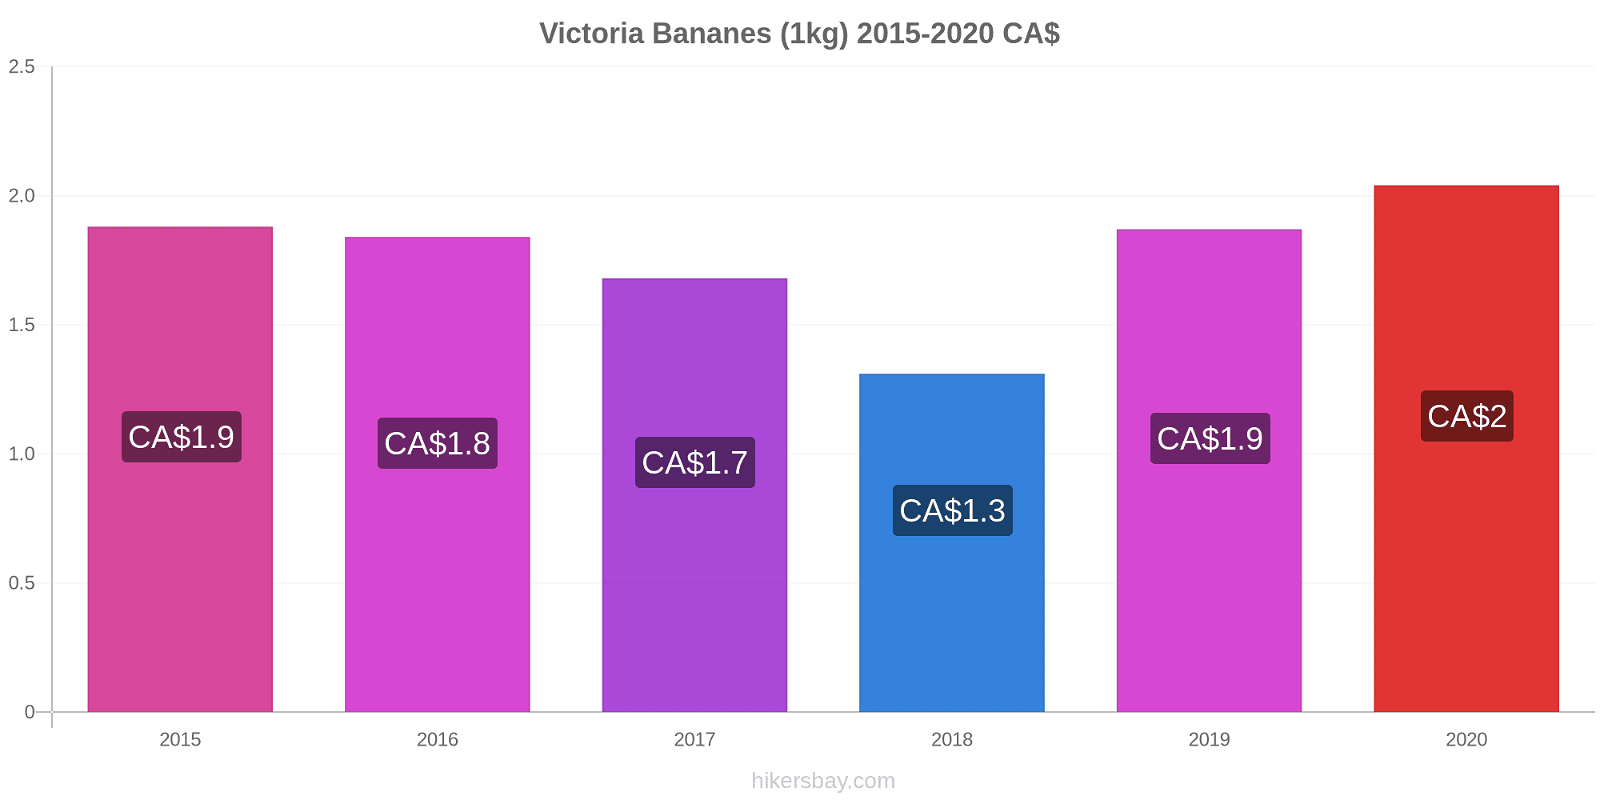 Victoria changements de prix Bananes (1kg) hikersbay.com